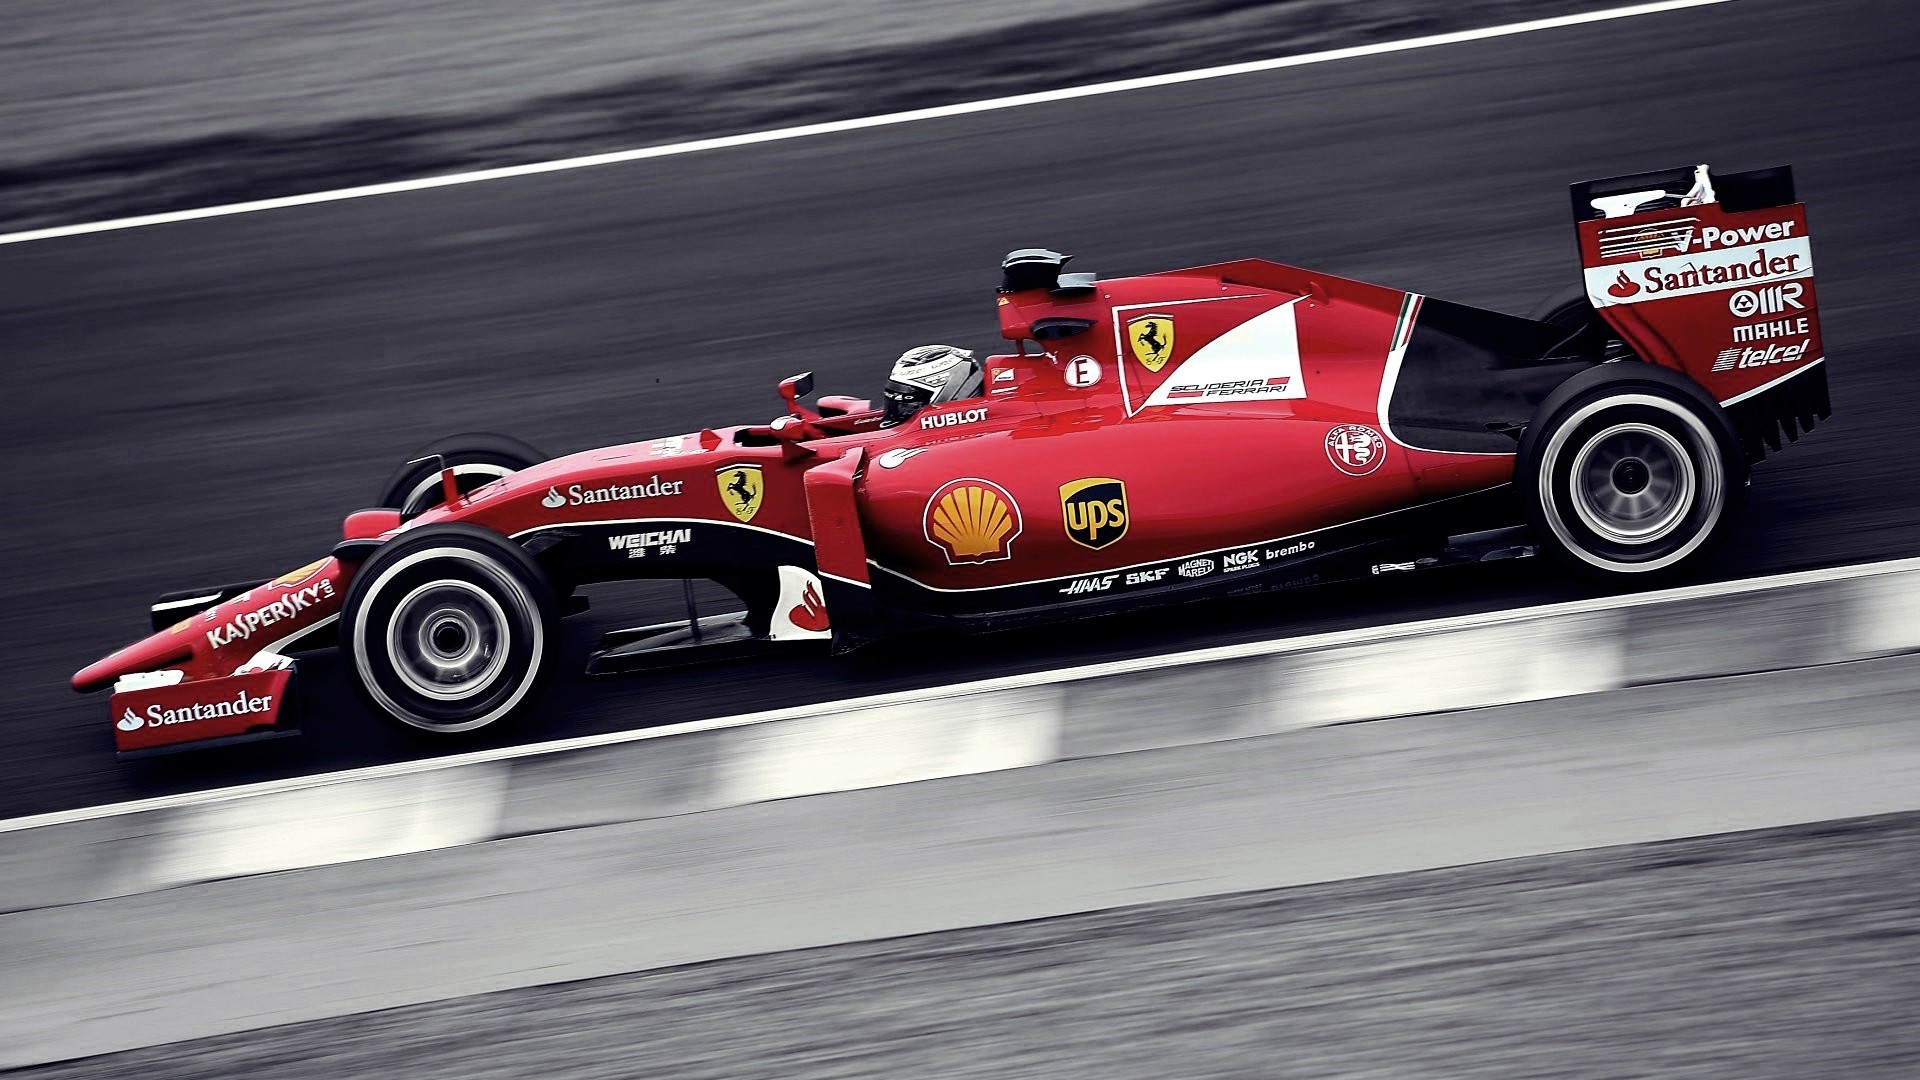 SF15 T, Ferrari F1, Selective Coloring, Black And Red, Race Cars, Sports, Kimi Raikkonen Wallpaper